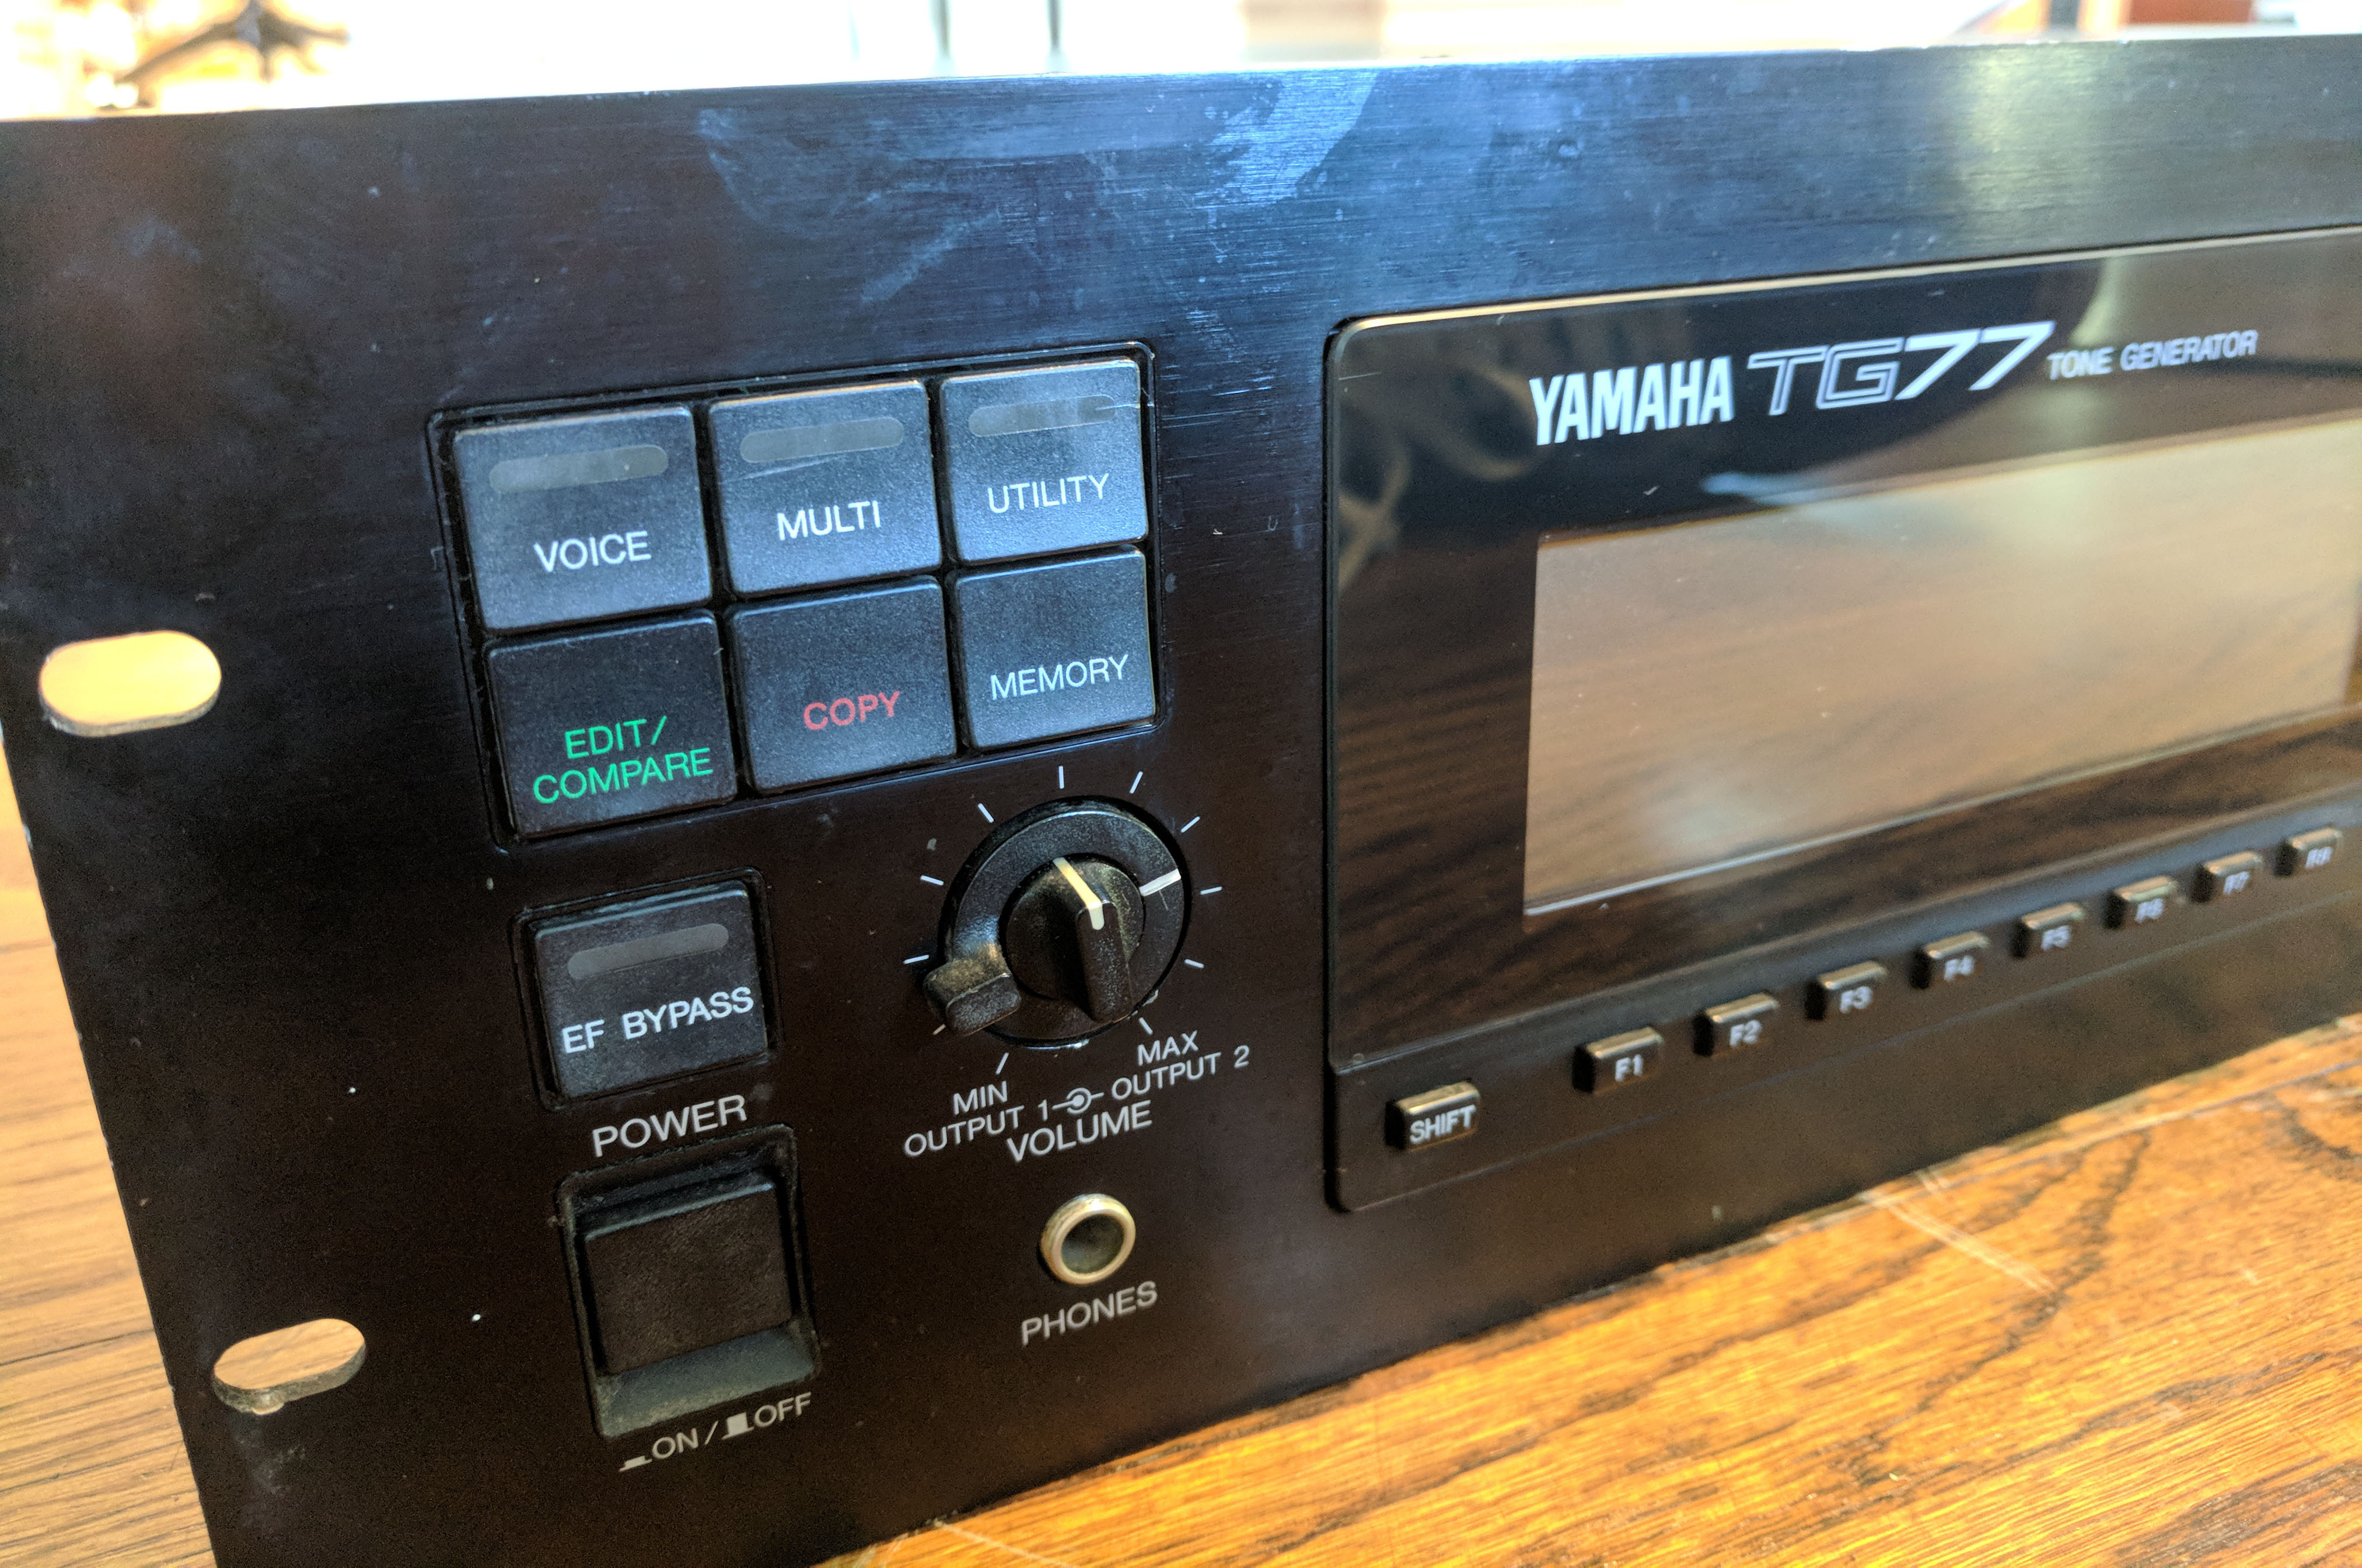 Yamaha TG77